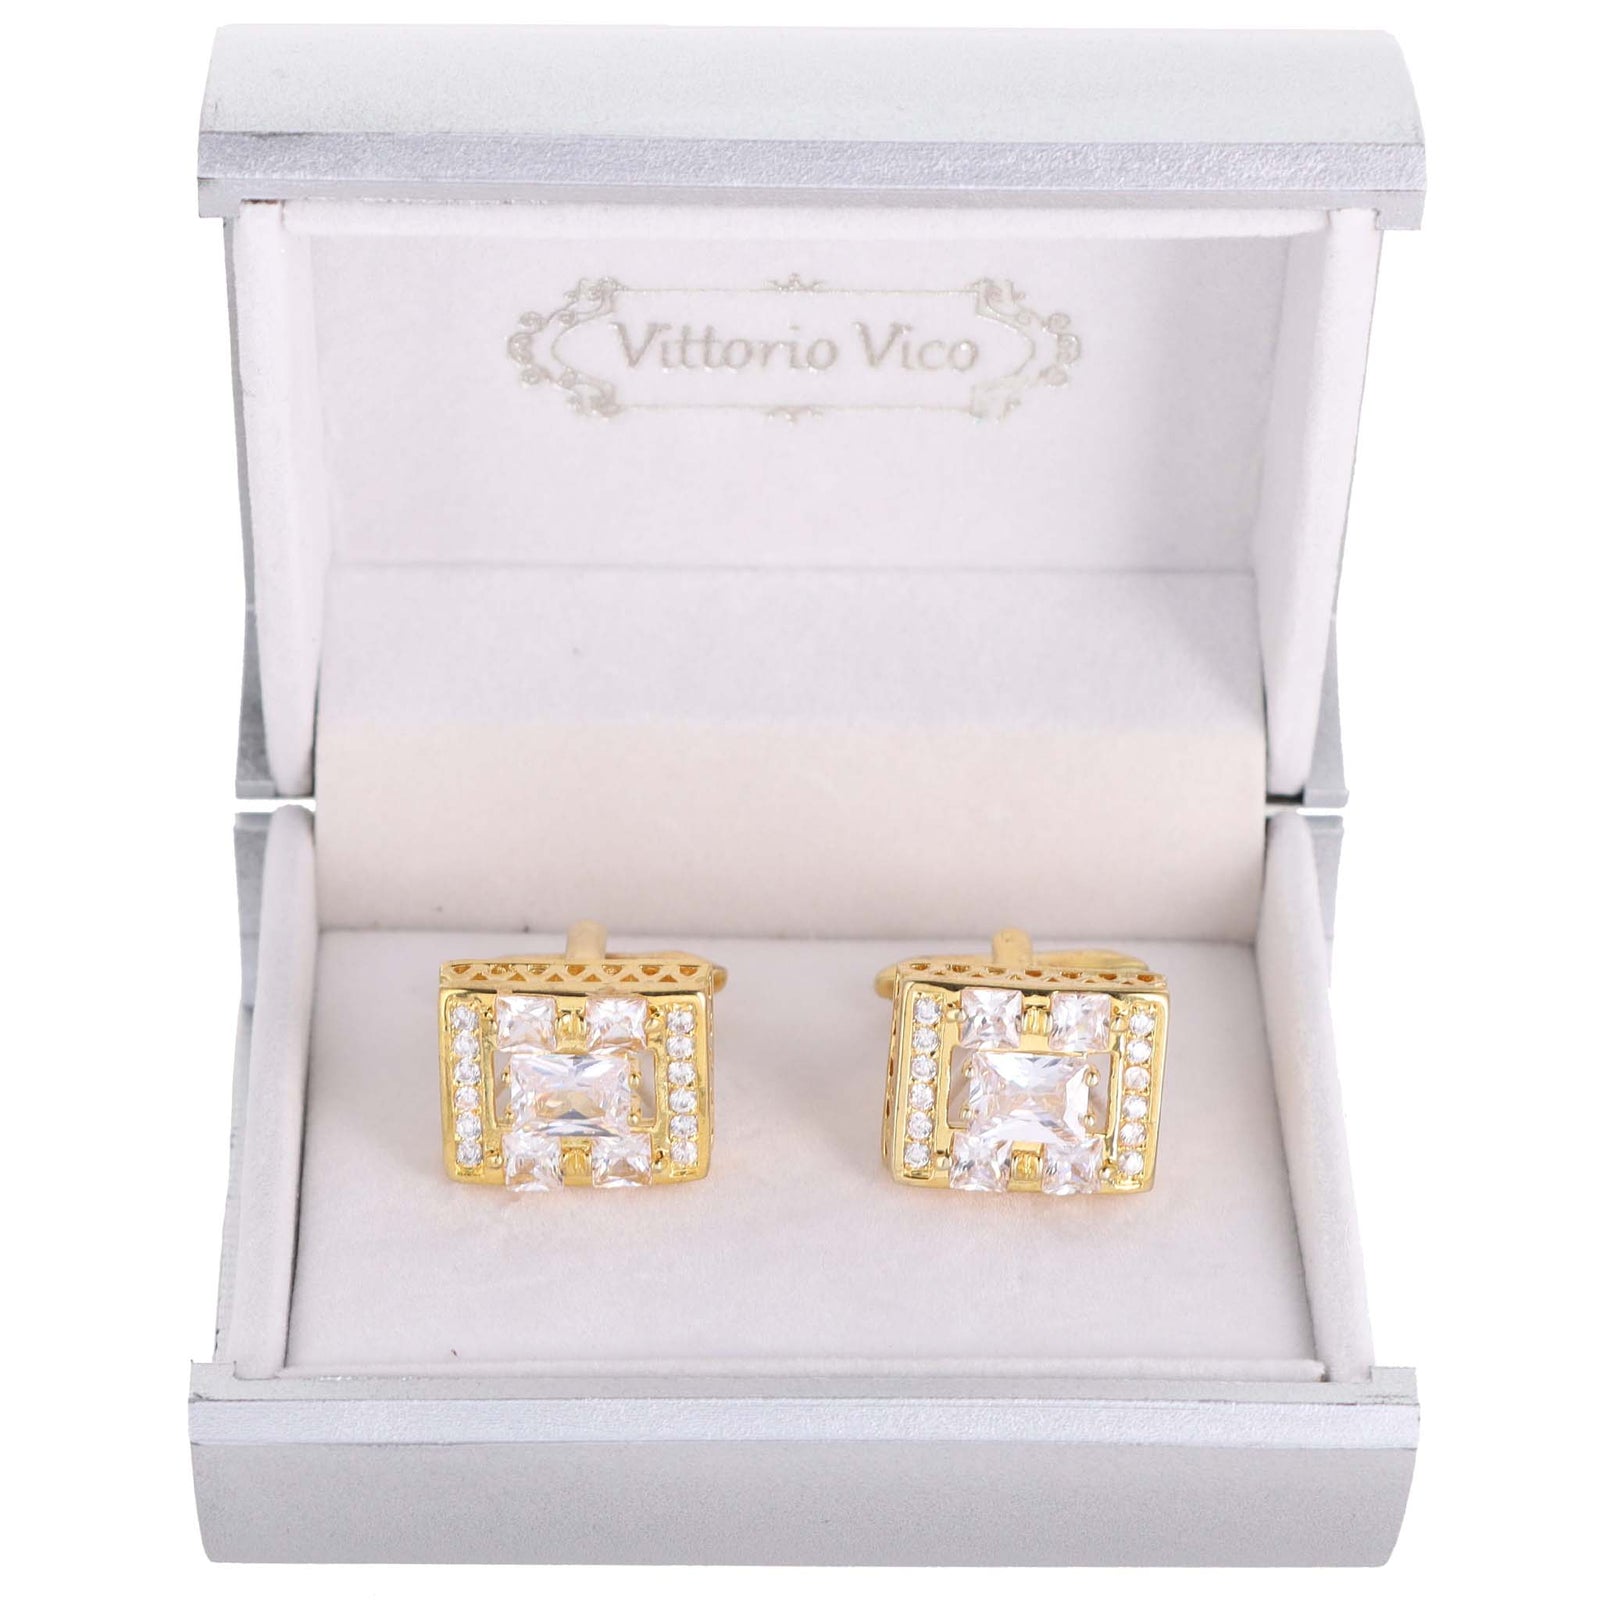 VITTORIO VICO Gold Iced Wedding Cufflinks (CL100x Series)